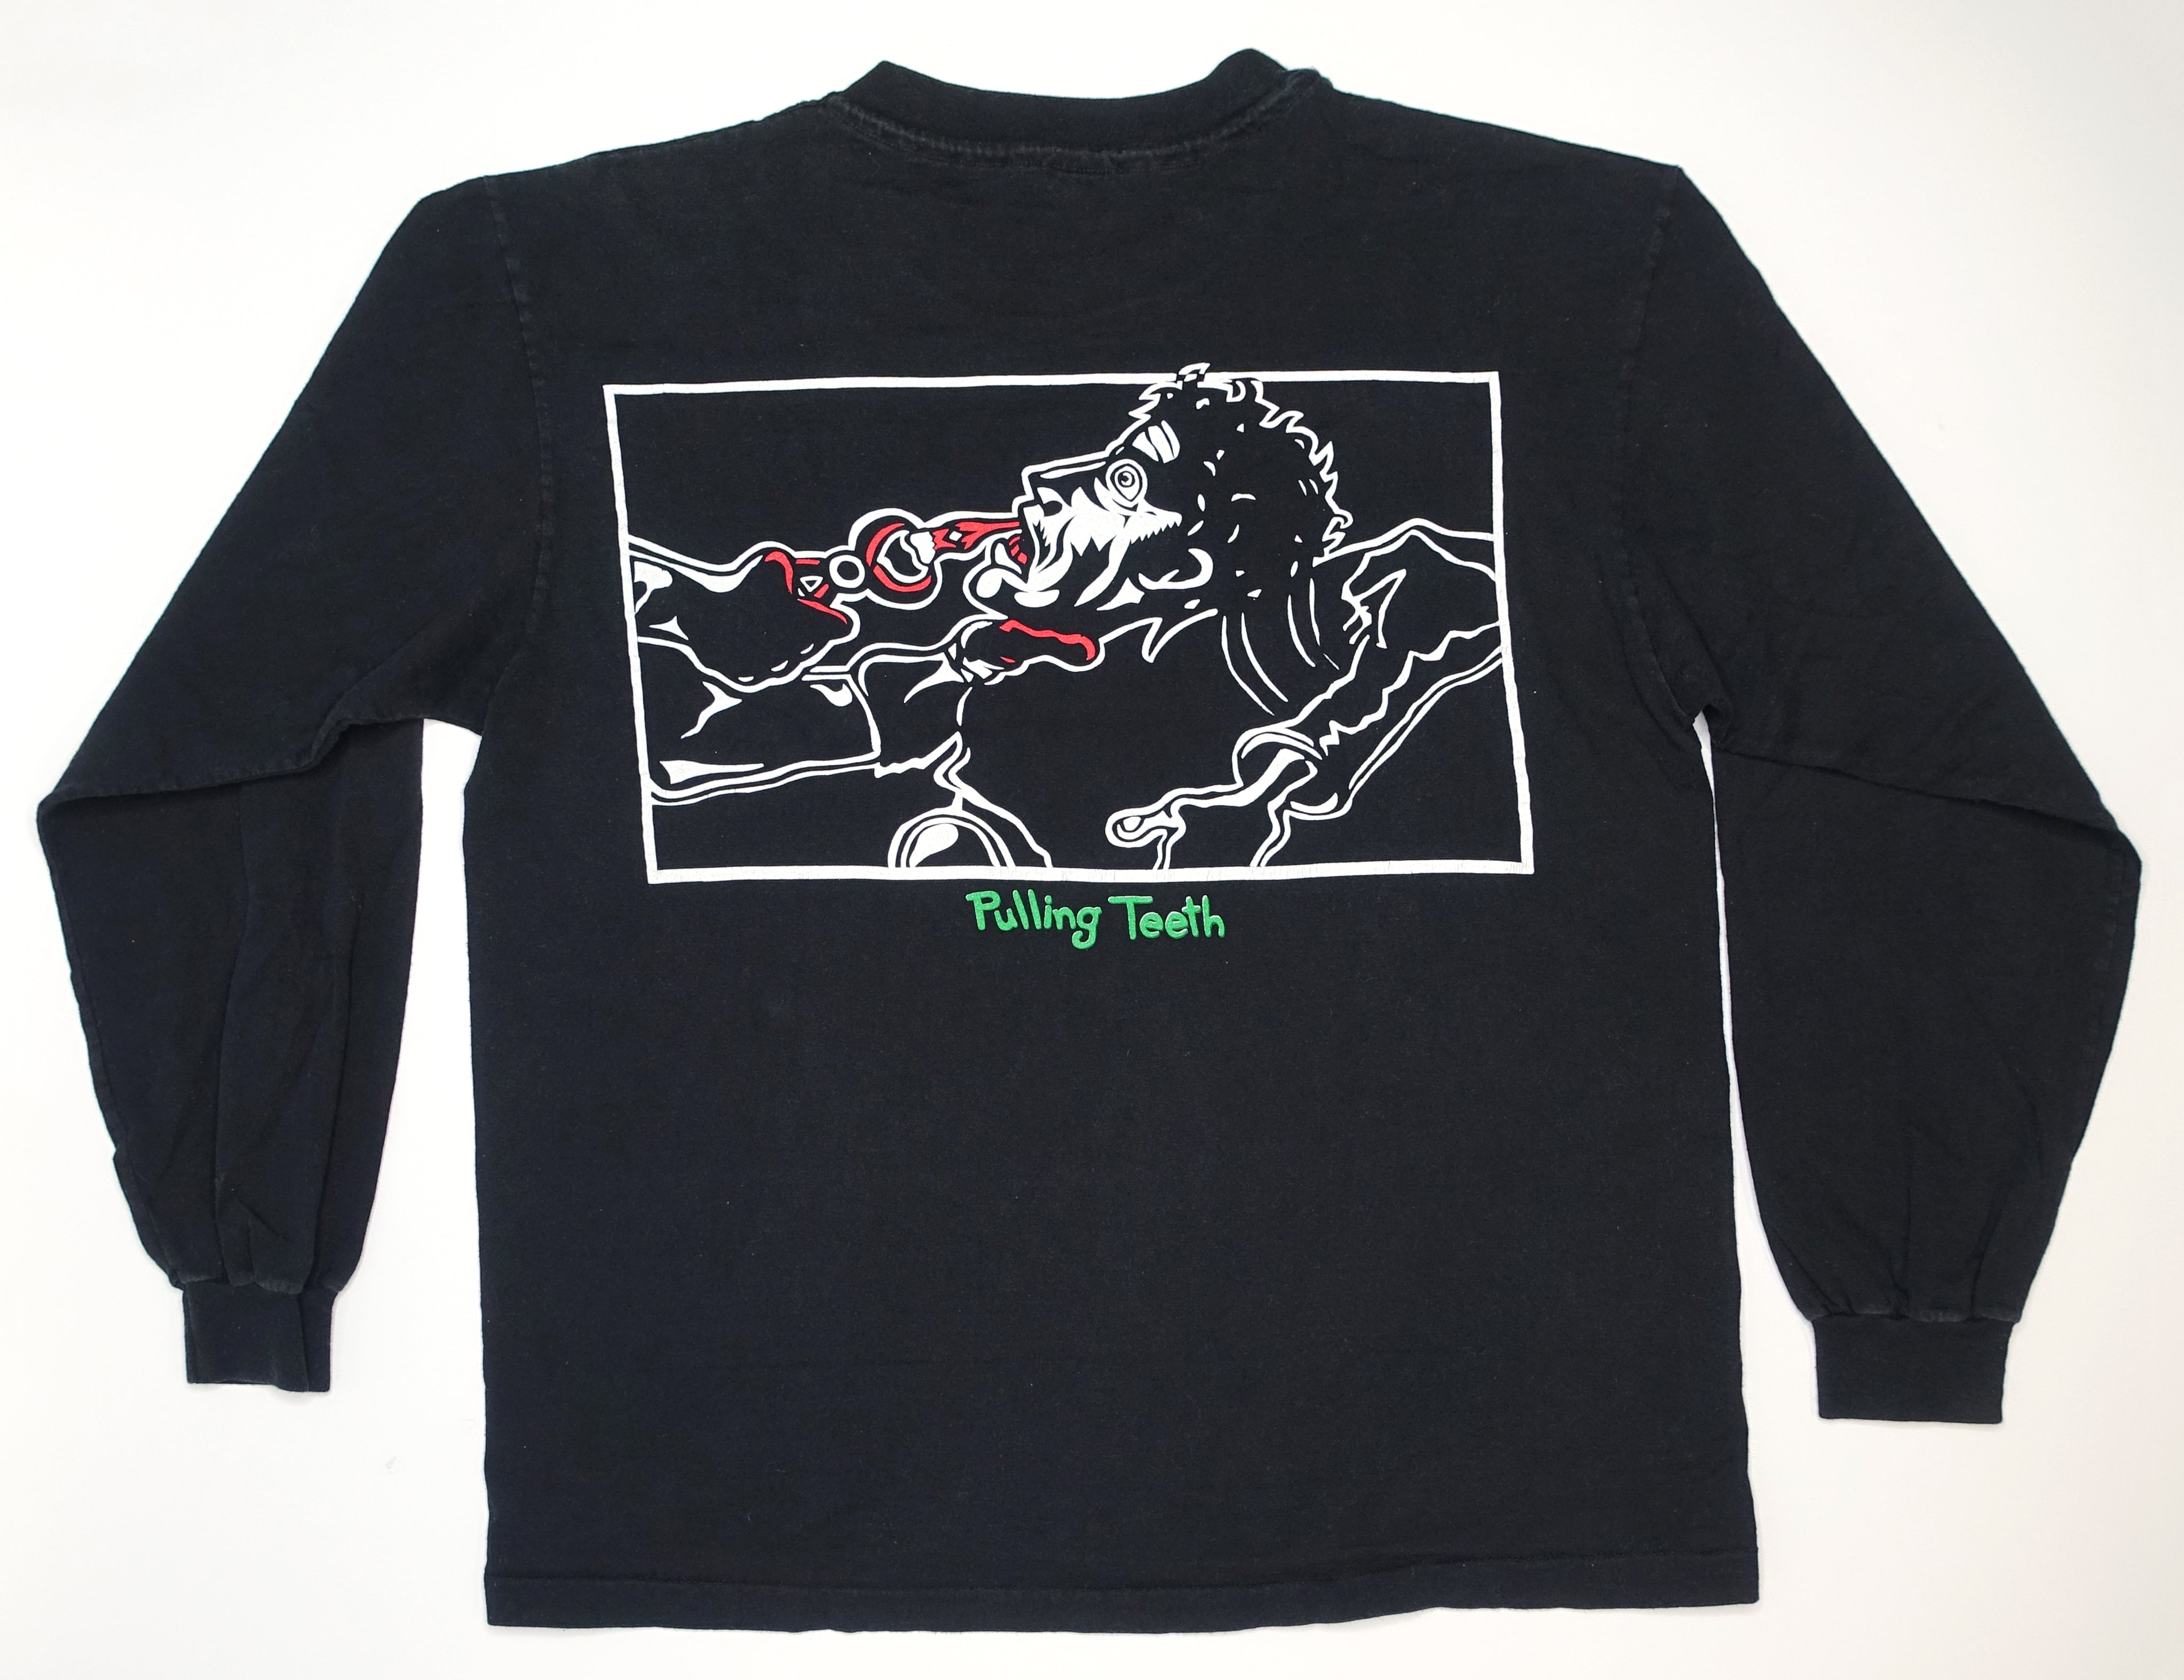 Green Day - Pulling Teeth / Dookie 1994 Long Sleeve Shirt Size XL